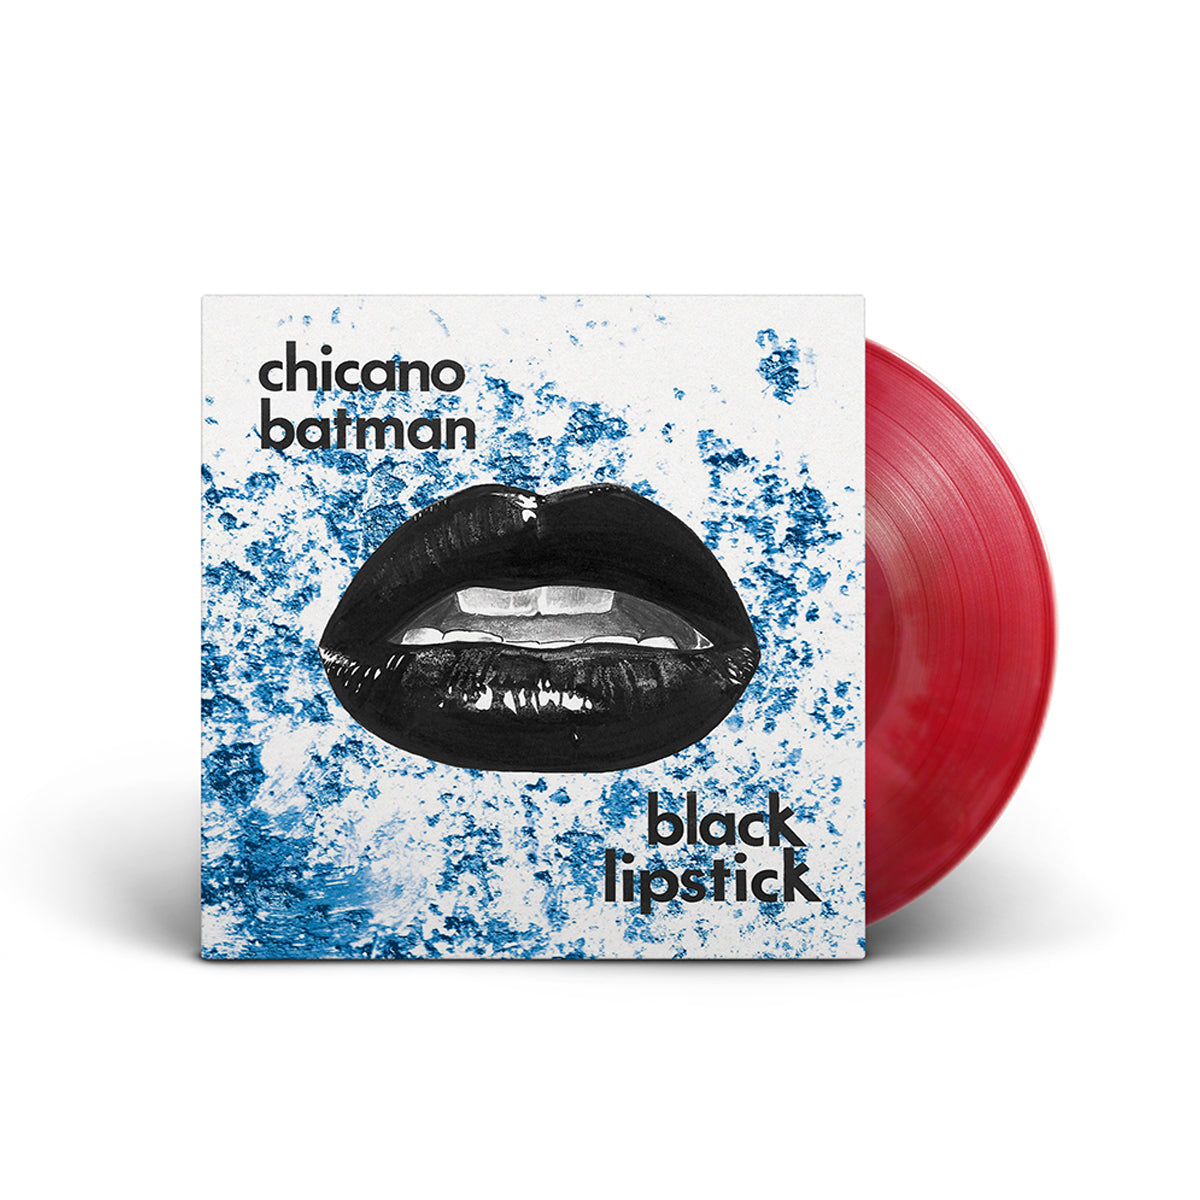 Chicano Batman - Black Lipstick (Red/Black Swirl Vinyl, Red Vamp Edition feat bonus tracks, limited)